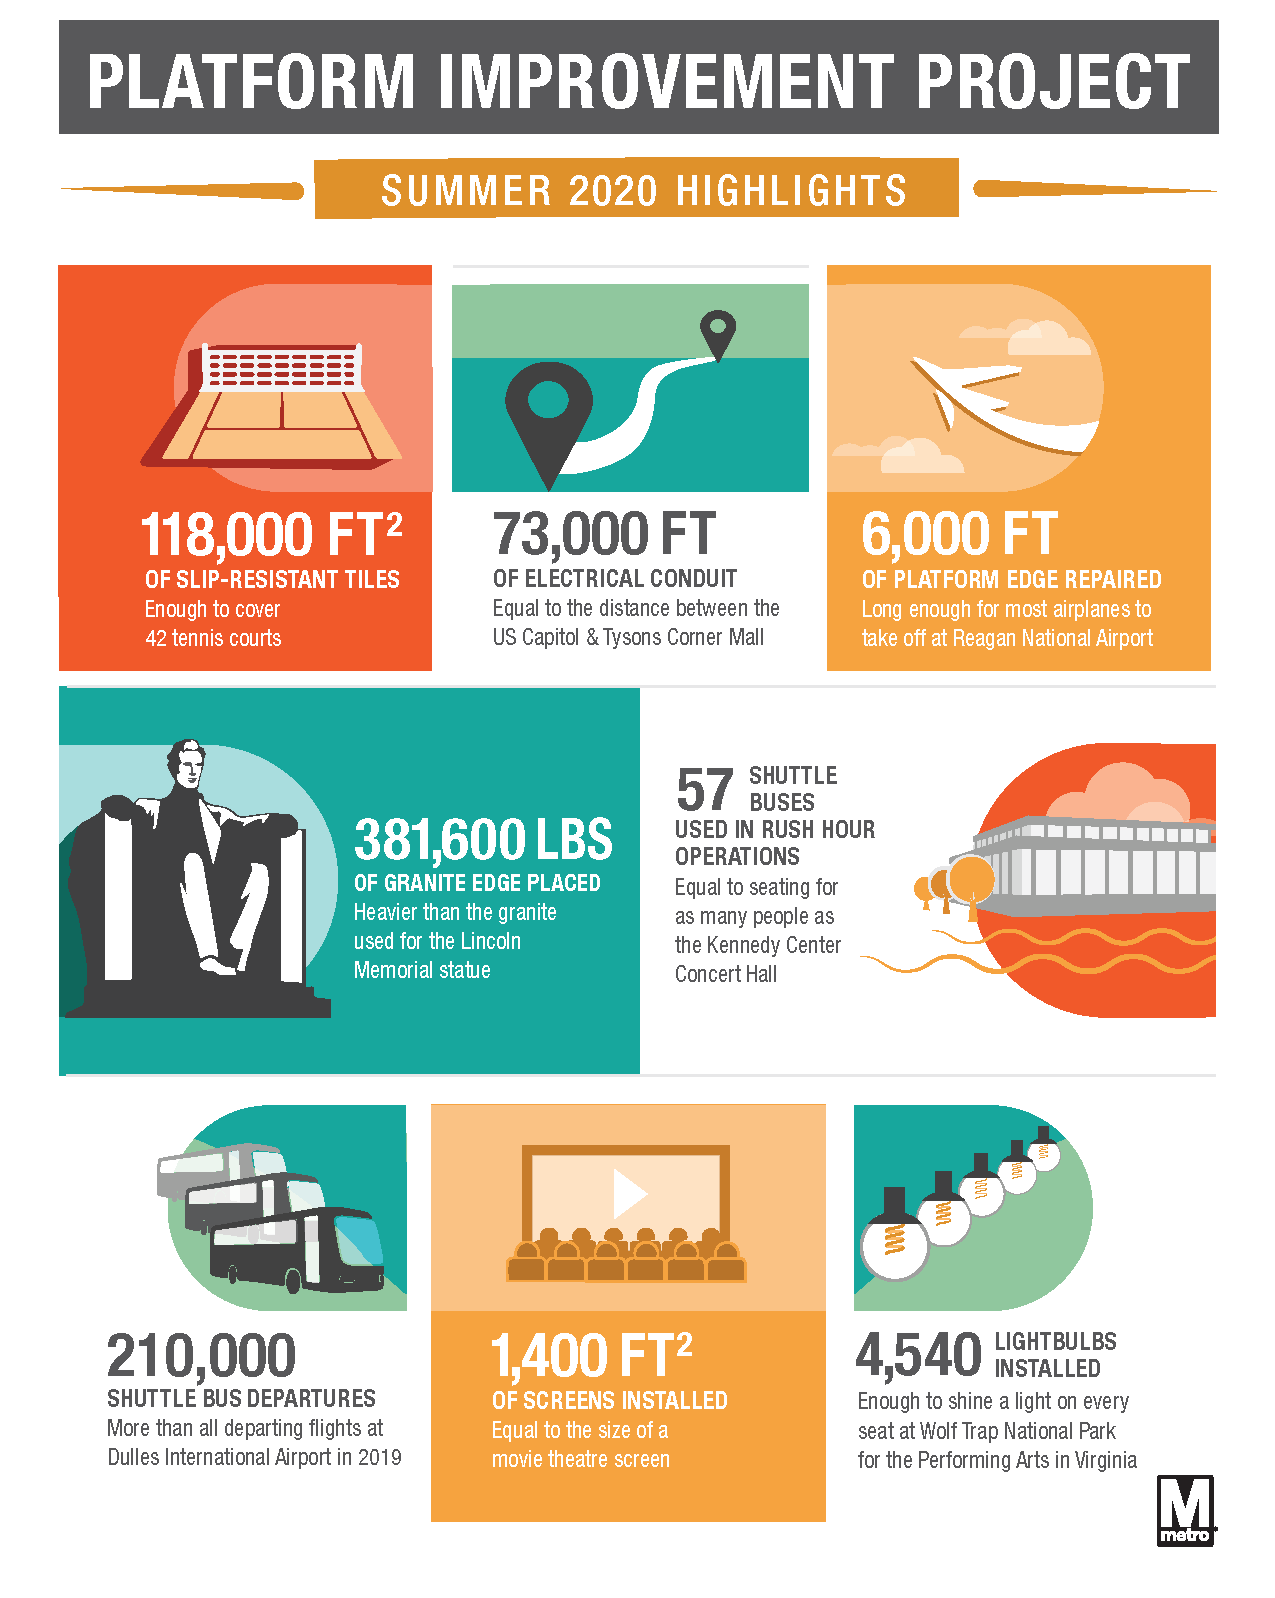 Summer 2020 Platform Improvement Project Highlights Infographic